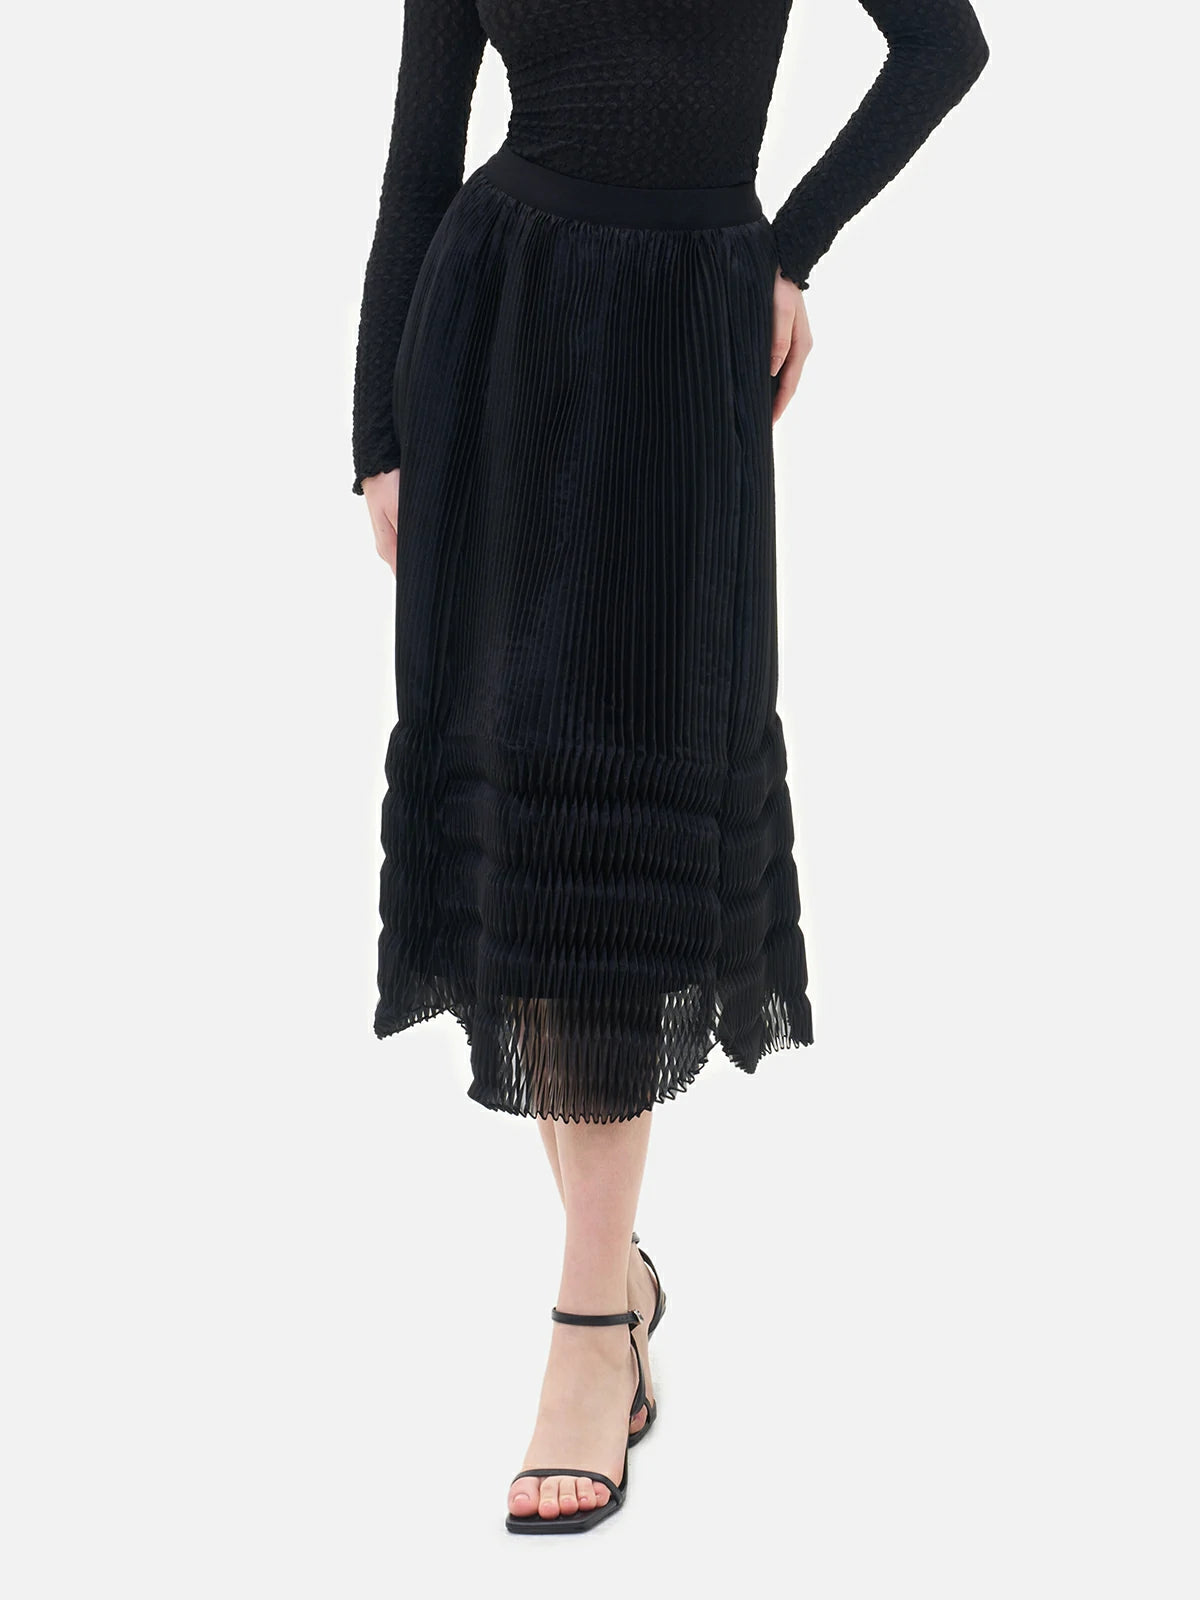 A stylish black semi-transparent midi skirt with V-shaped pleats, showcasing the unique and elegant charm of women.